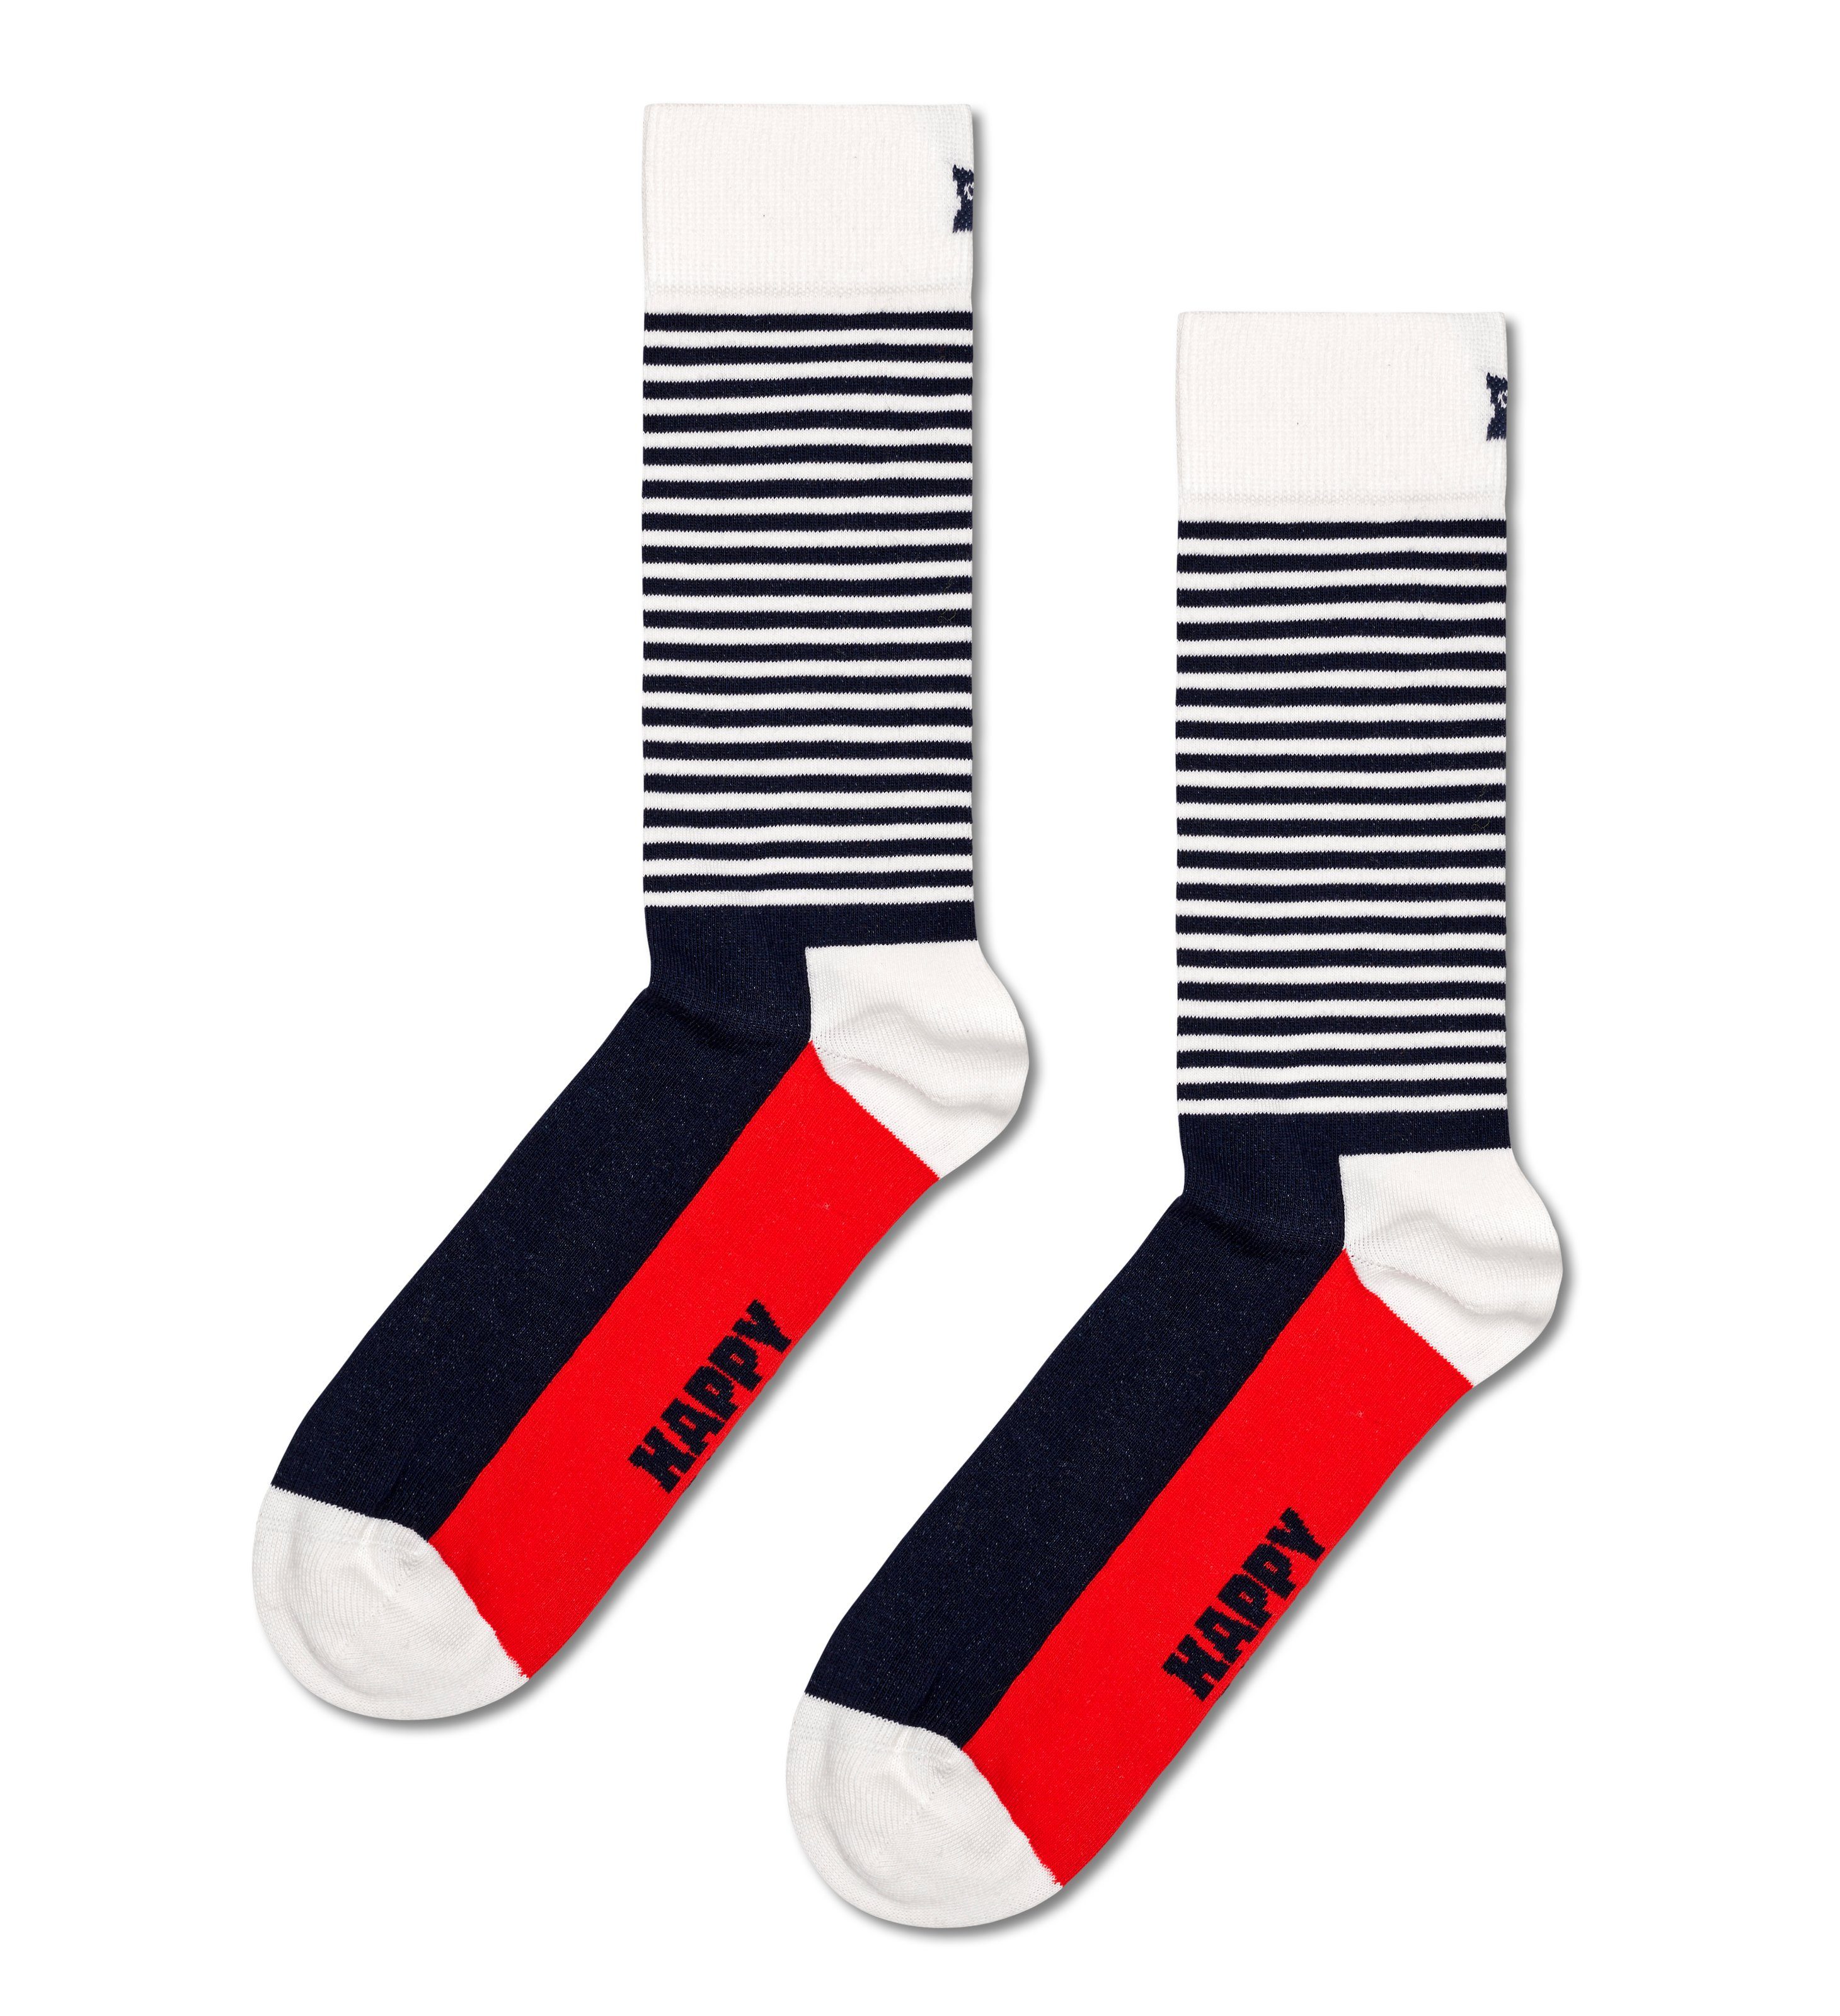 Happy Socks Socken Navy Set Classic Navy & Stripes Gift 2 Classic Dots (Packung, 4-Paar) Socks 4-Pack